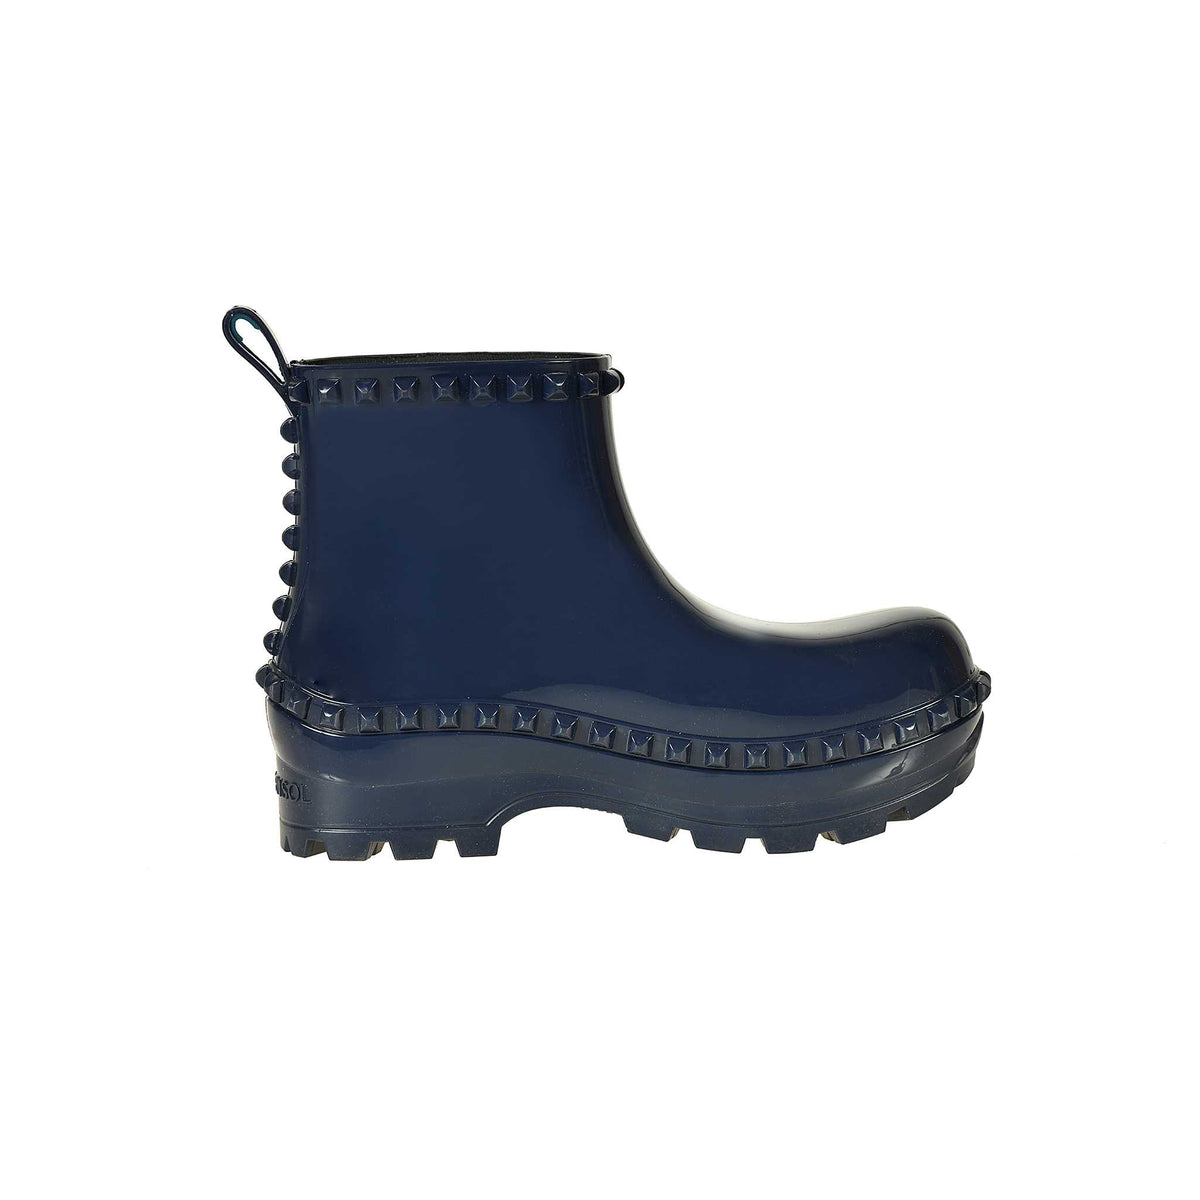 Vegan Carmen Sol boots for women in color navy blue